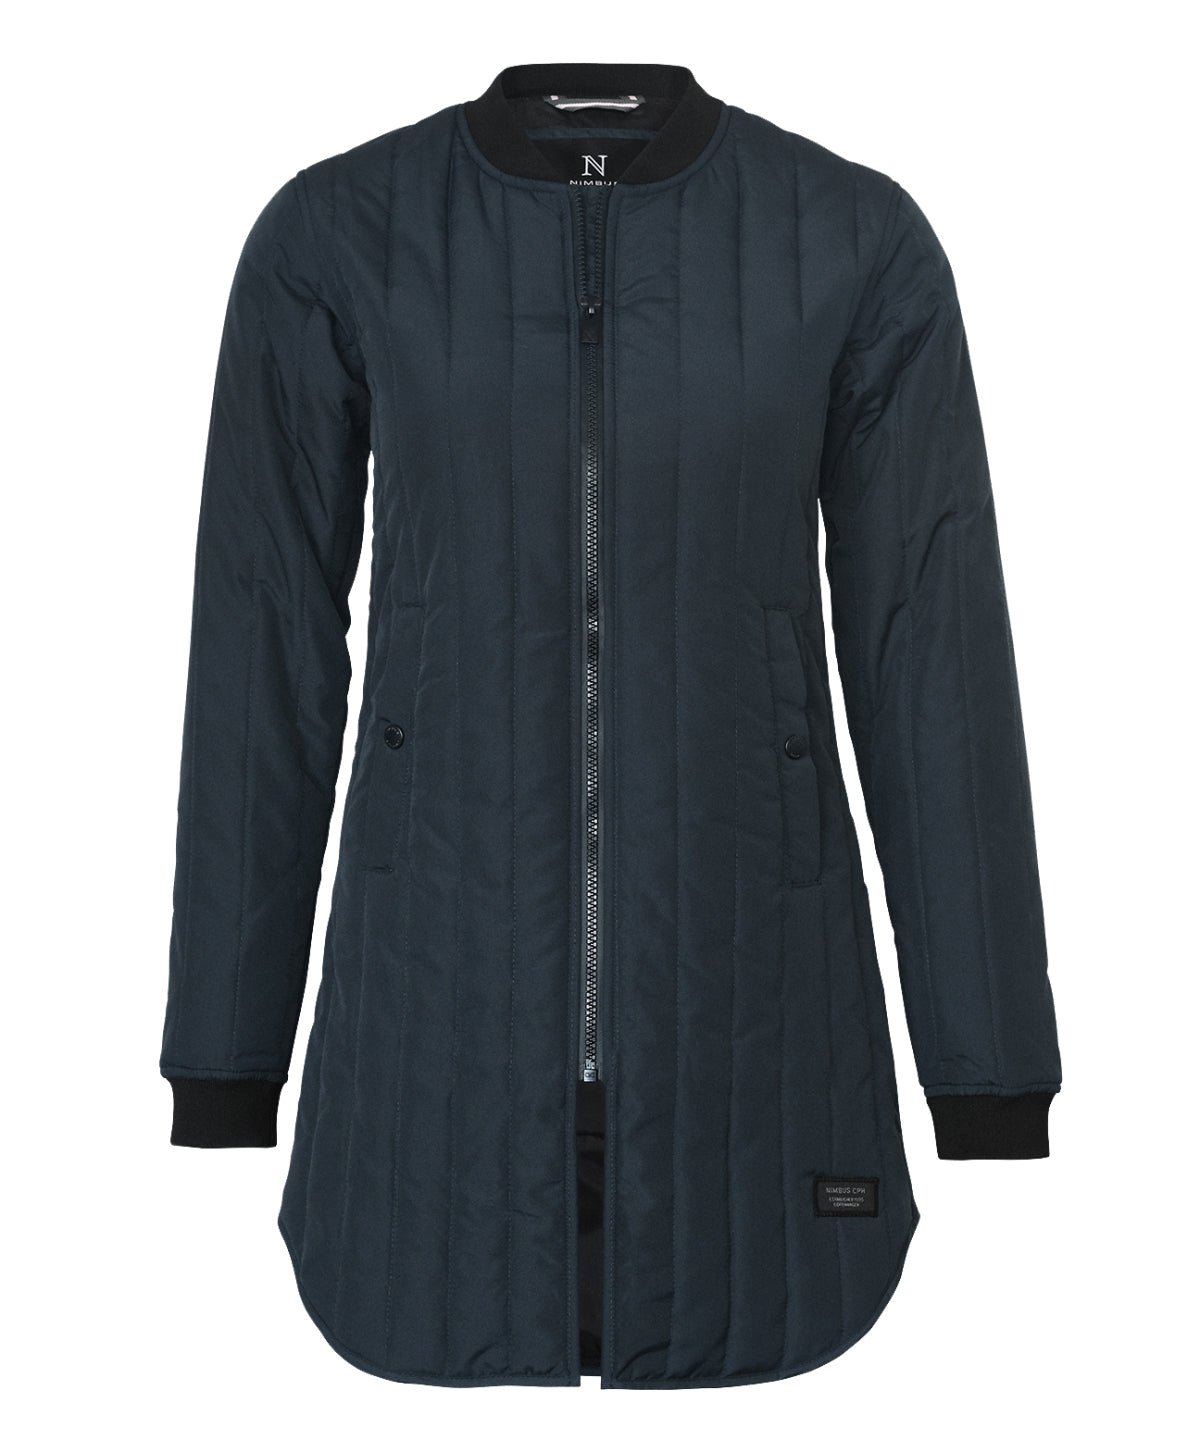 Jakkar - Women’s Lindenwood – Urban Style Quilted Jacket